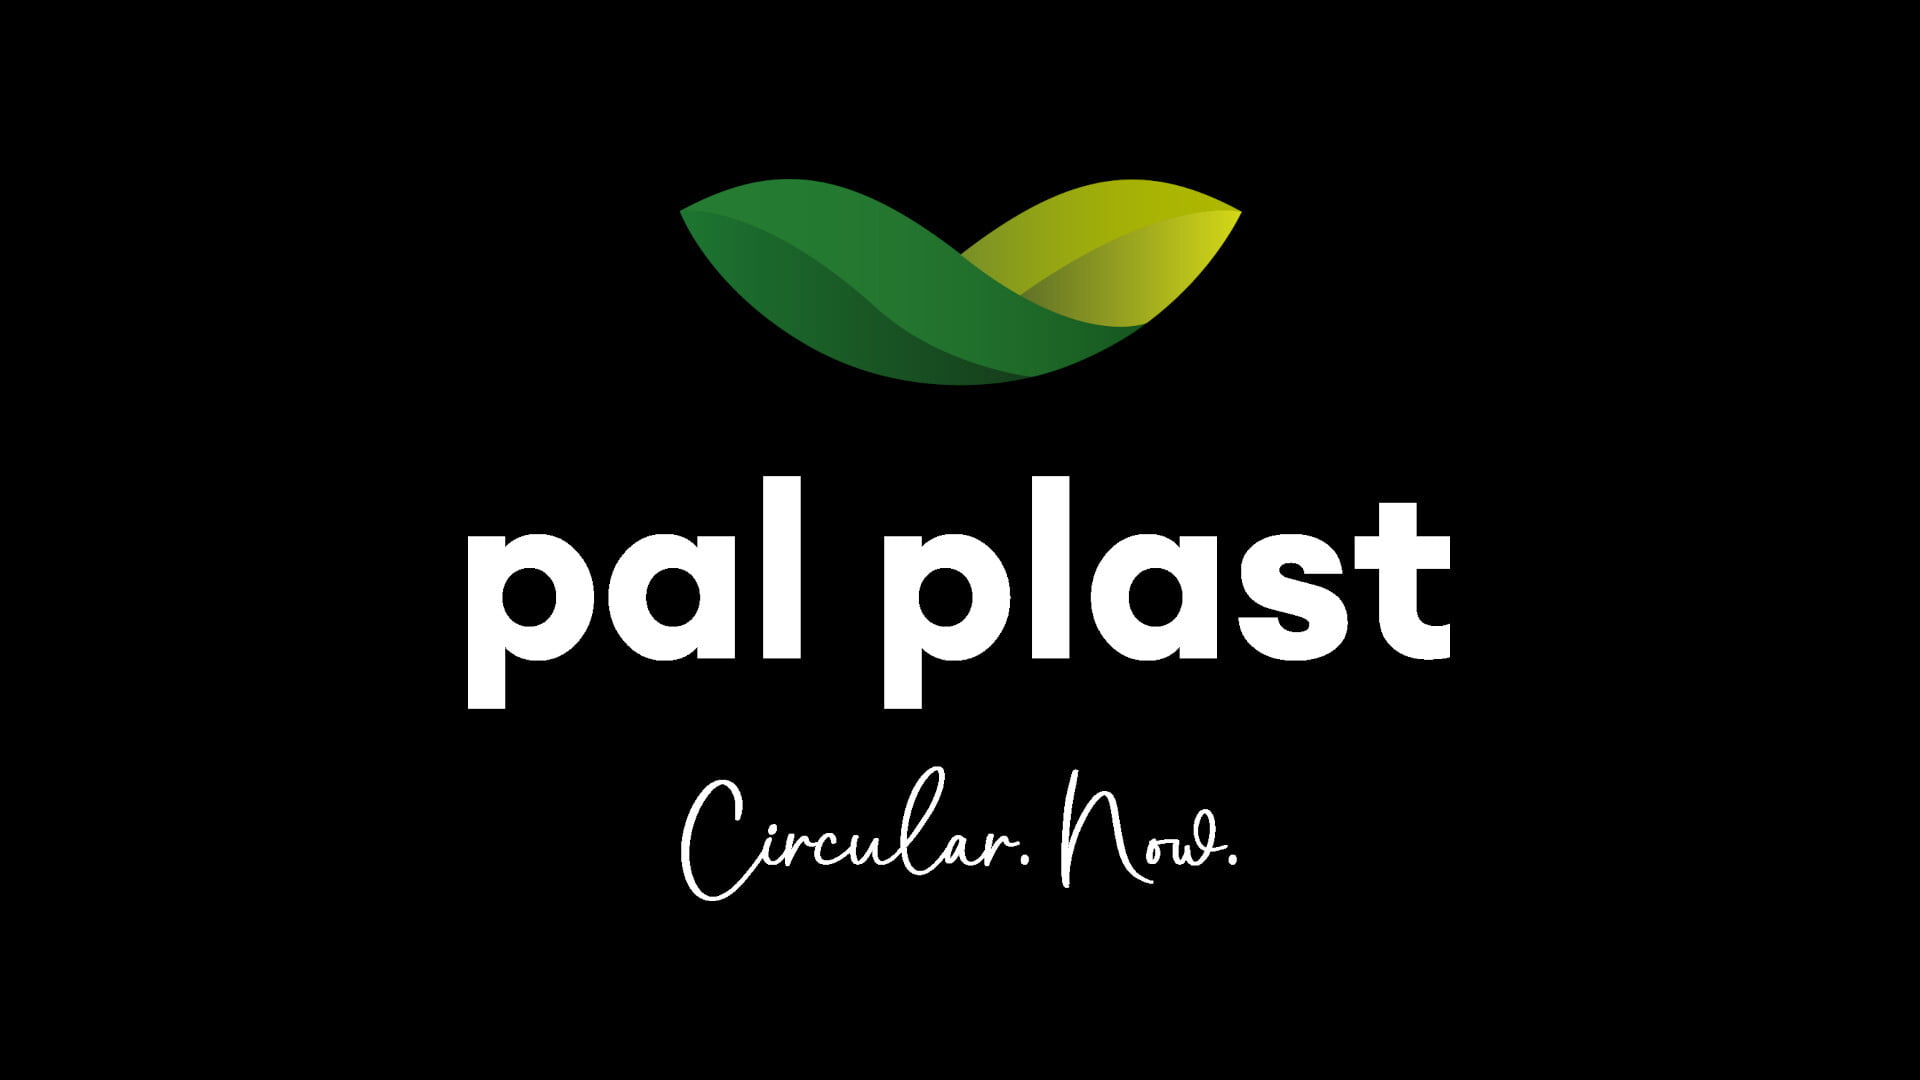 palplast footer logo